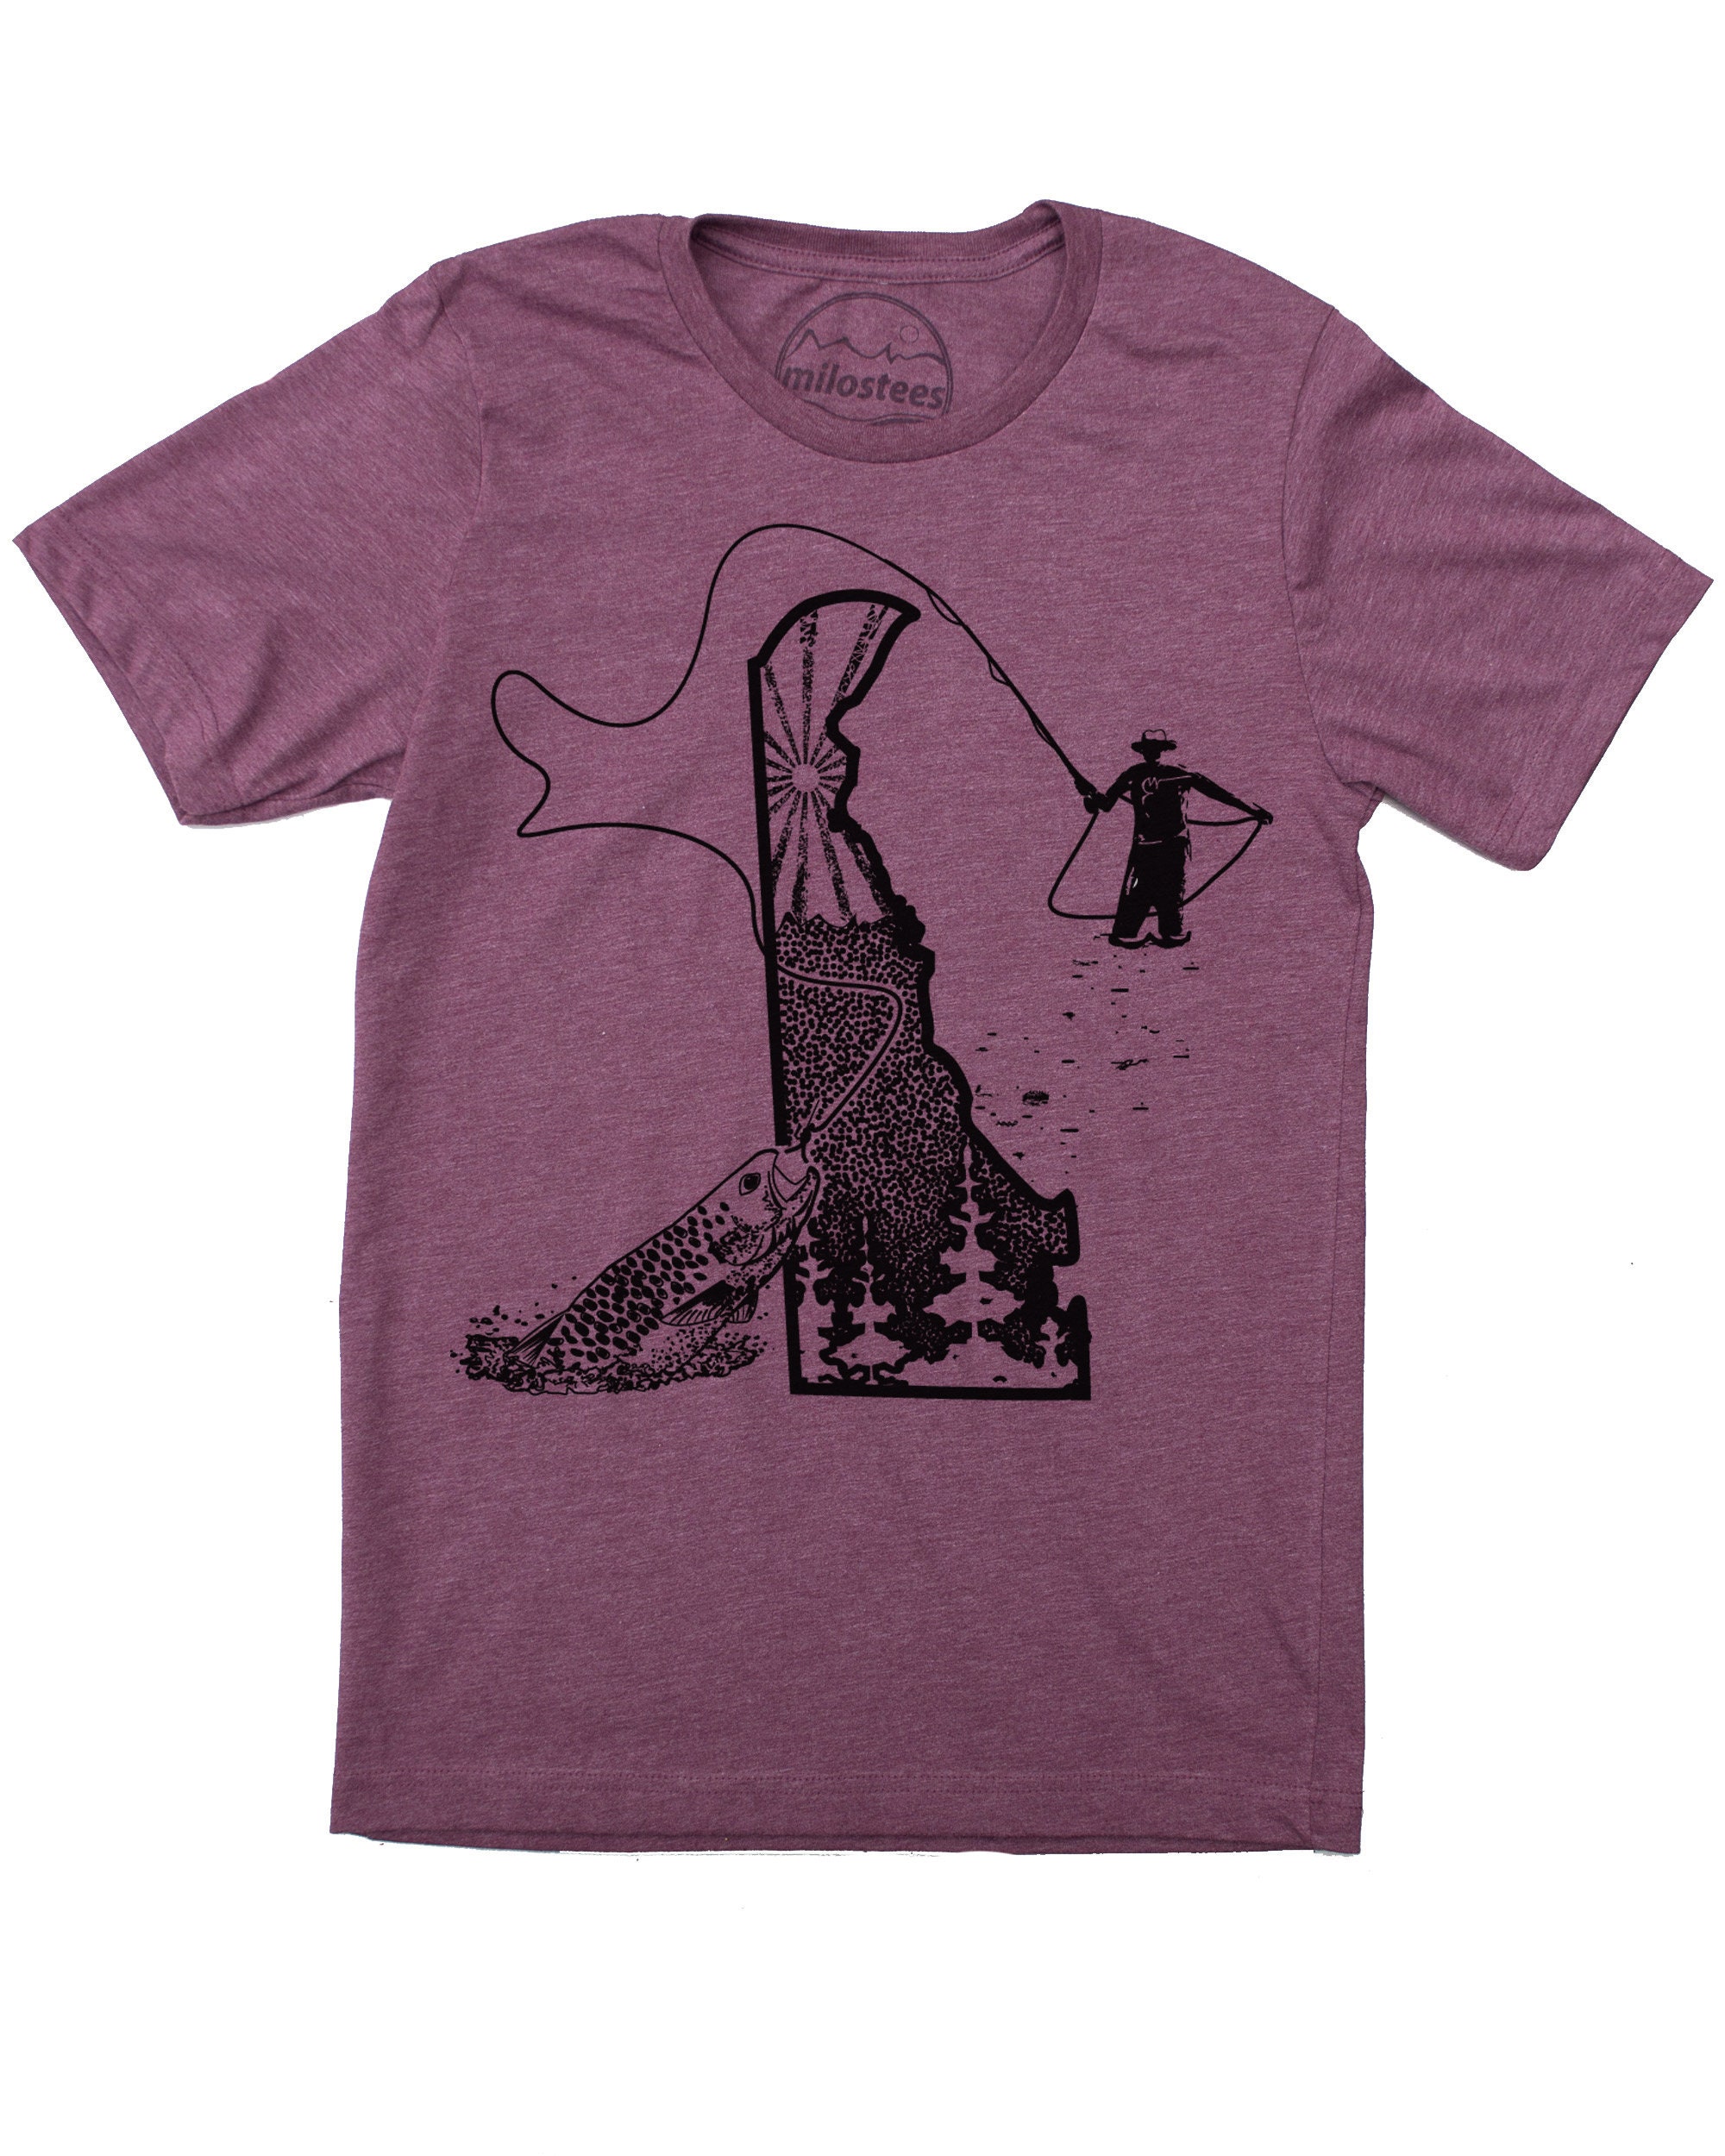 Fly Fishing Shirt, Fisherman Apparel on Soft 50/50 Tee in Purple